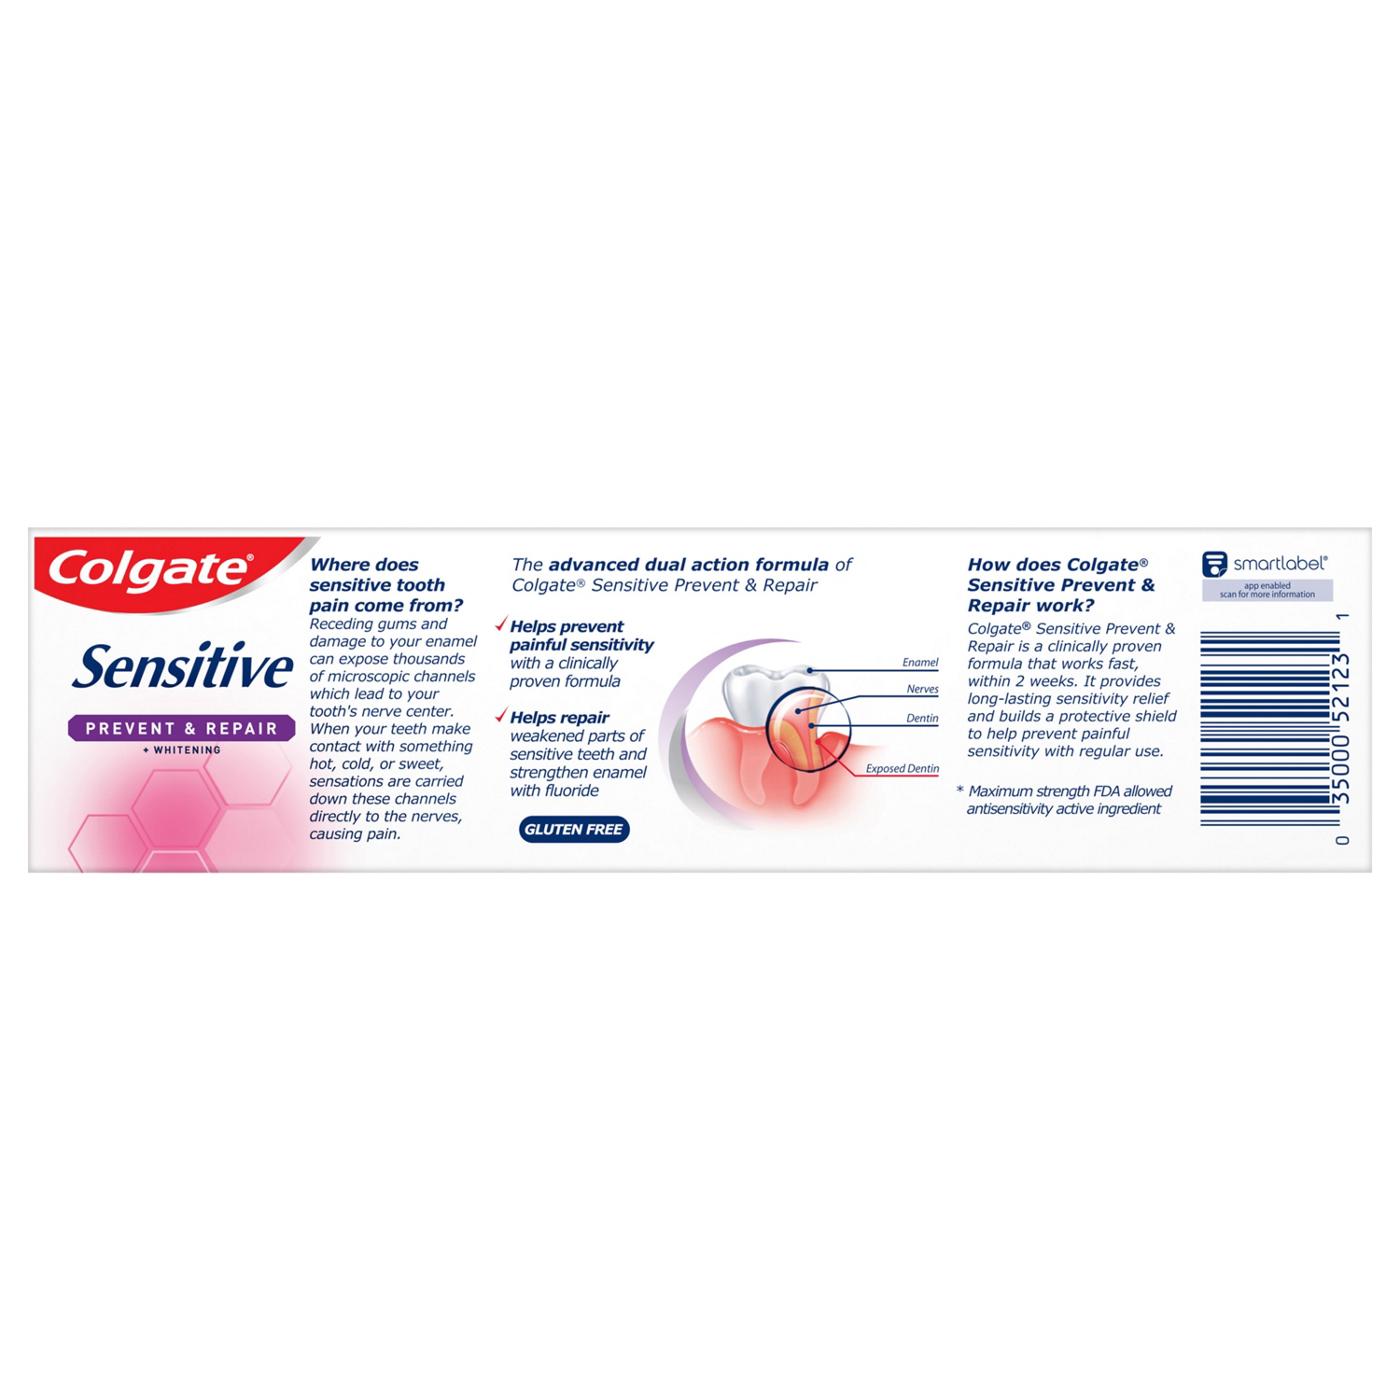 Colgate Sensitive Prevent & Repair Anticavity Toothpaste - Gentle Mint; image 3 of 3